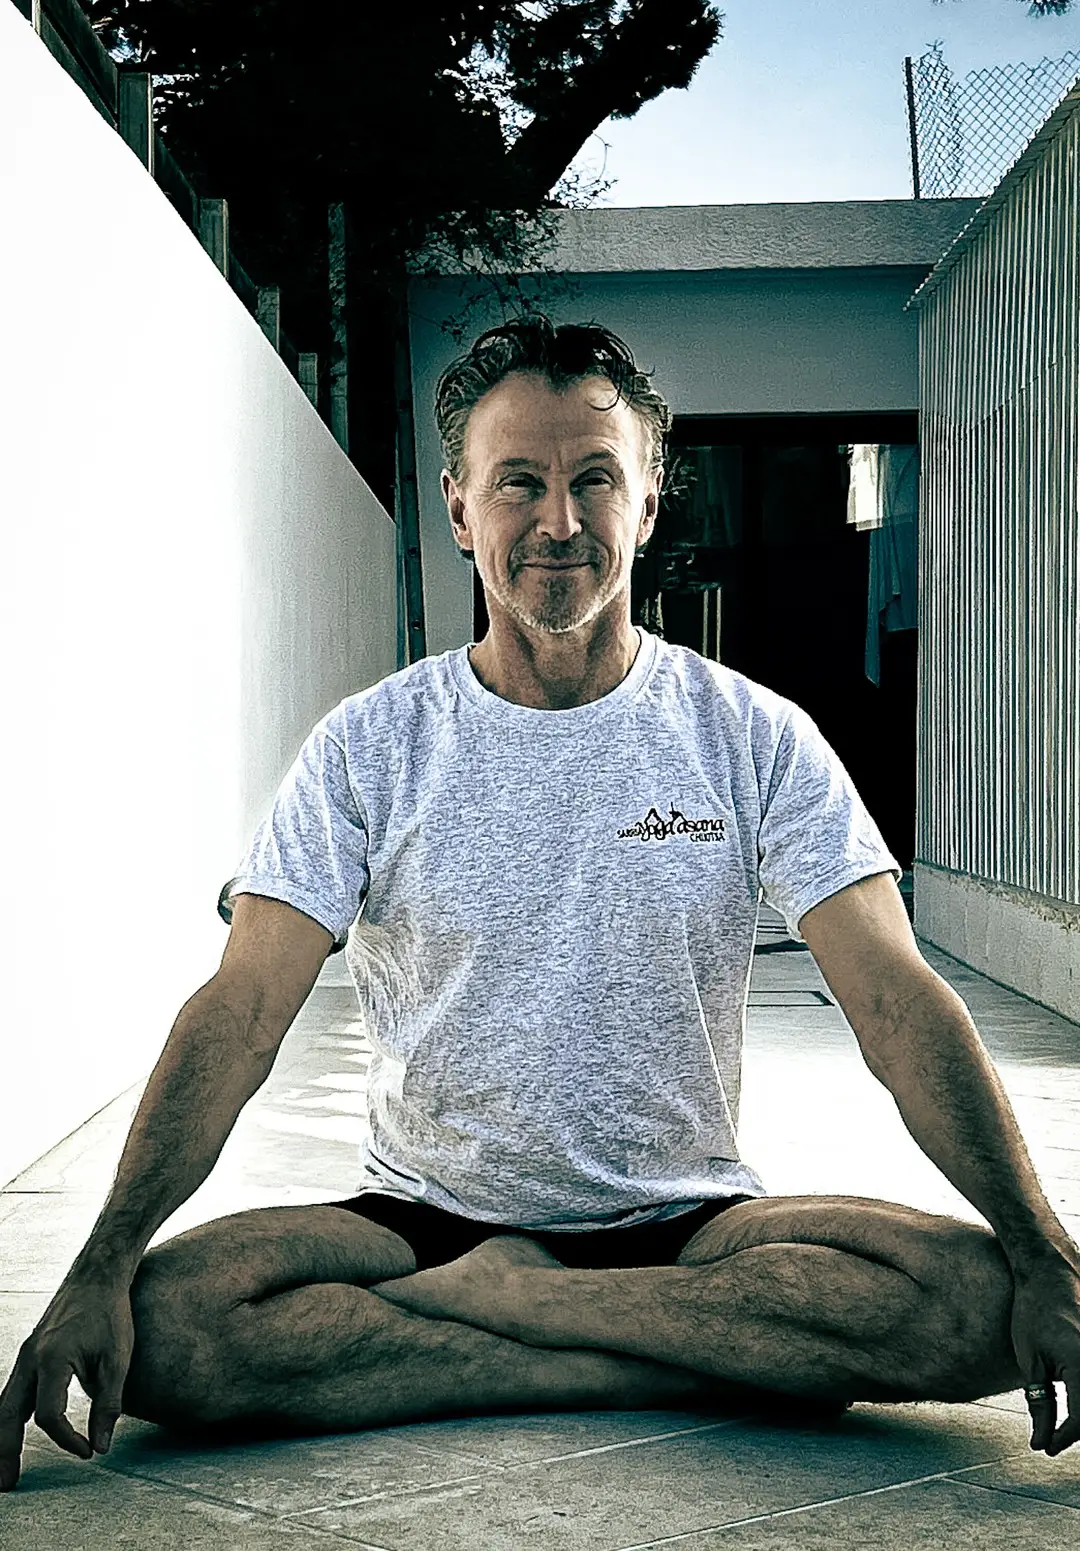 Santiago pinto practicing Ashtanga Vinyasa Yoga cross-legged on a sidewalk, smiling at the camera.